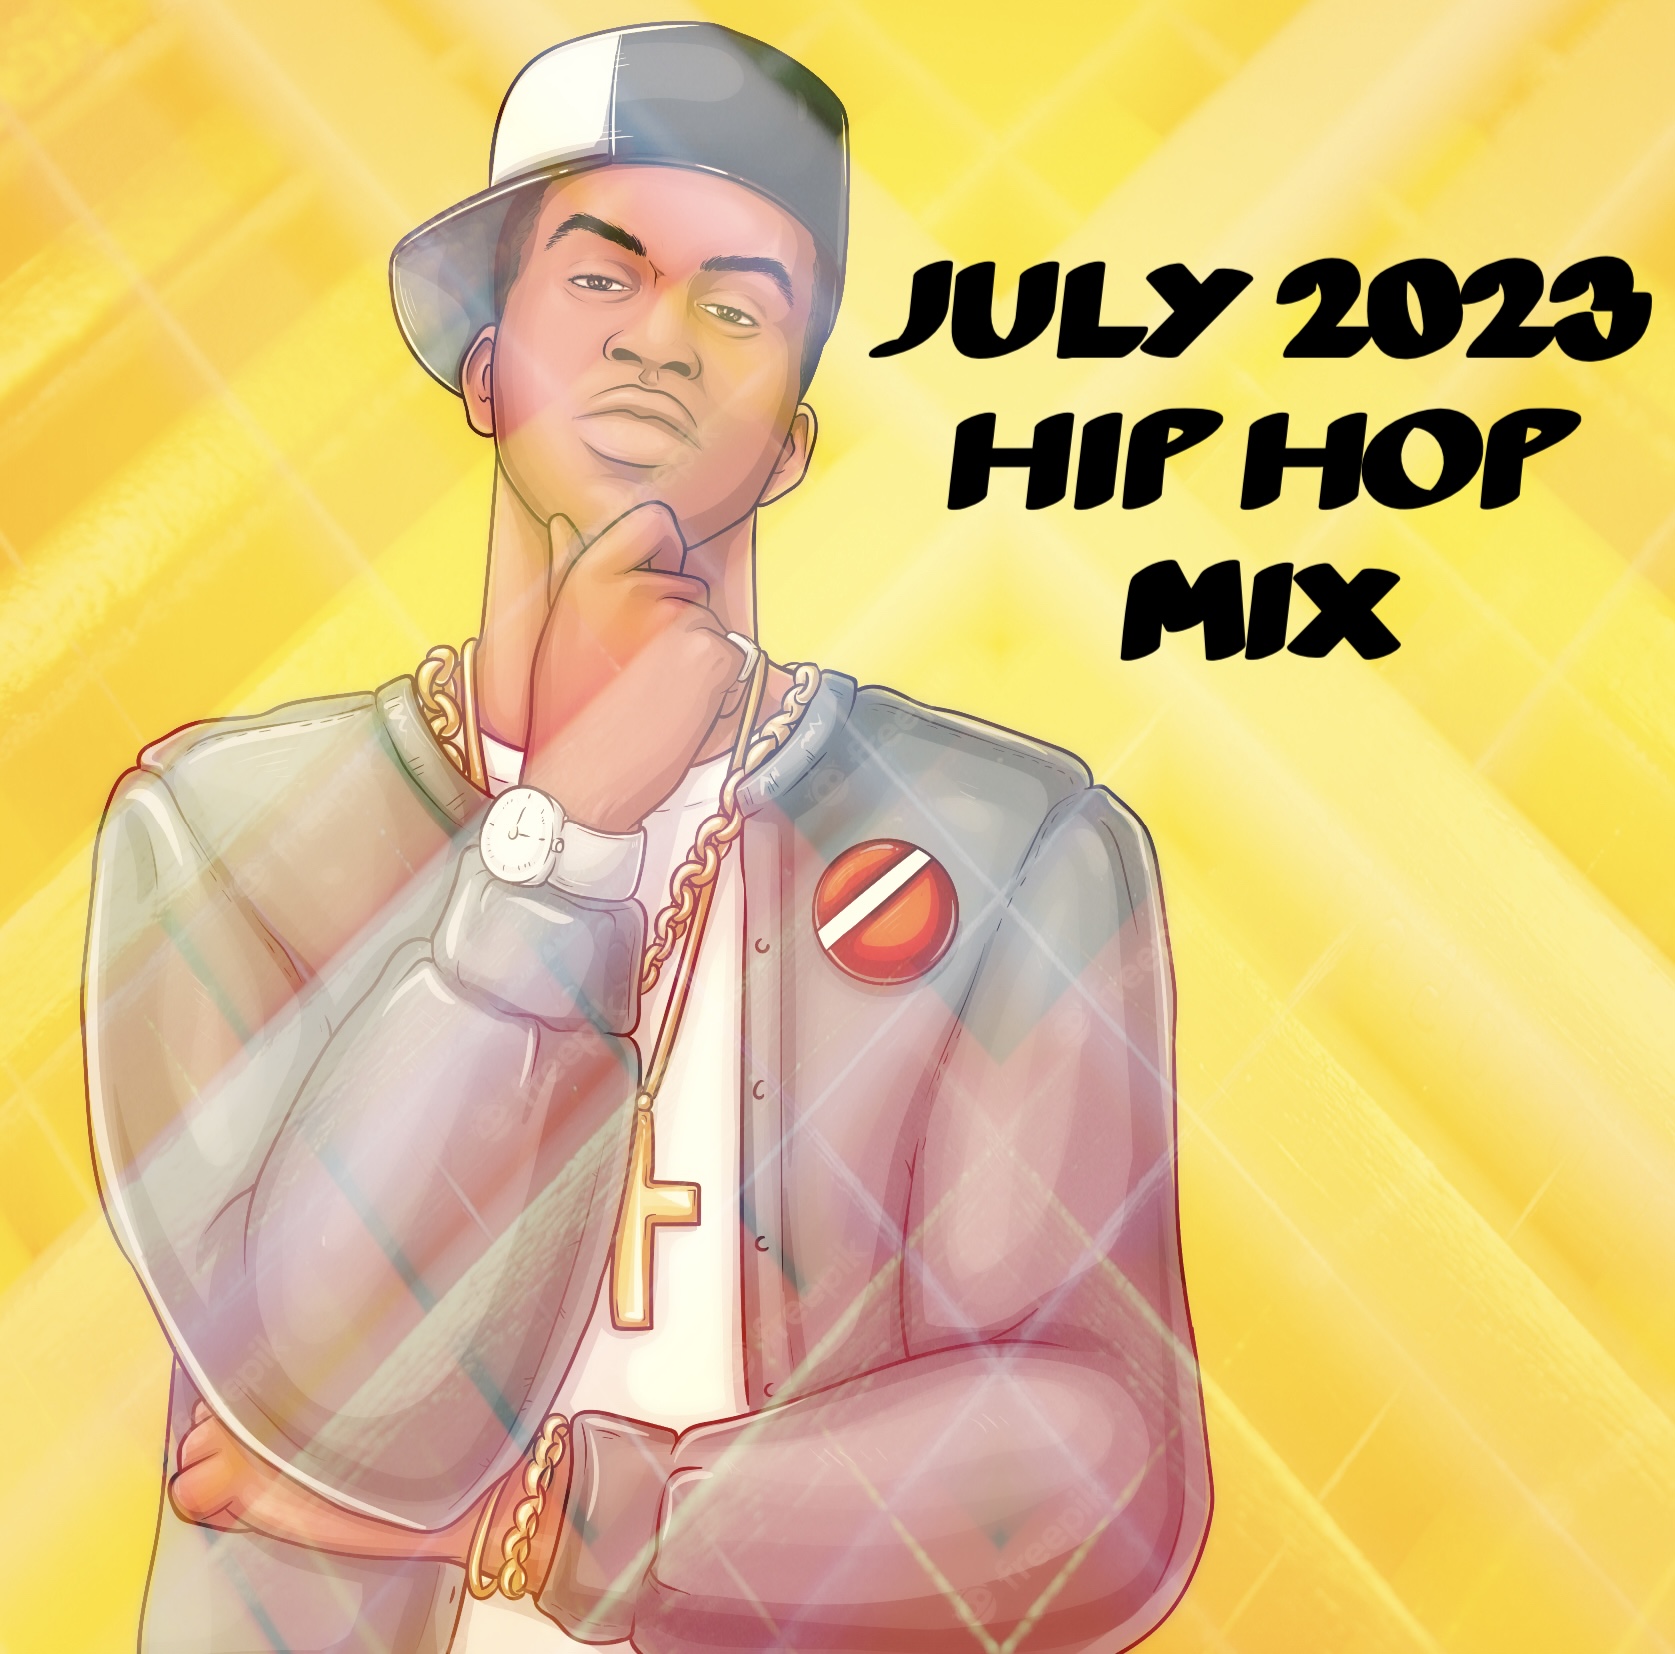 July 2023 - Hip Hop Mix